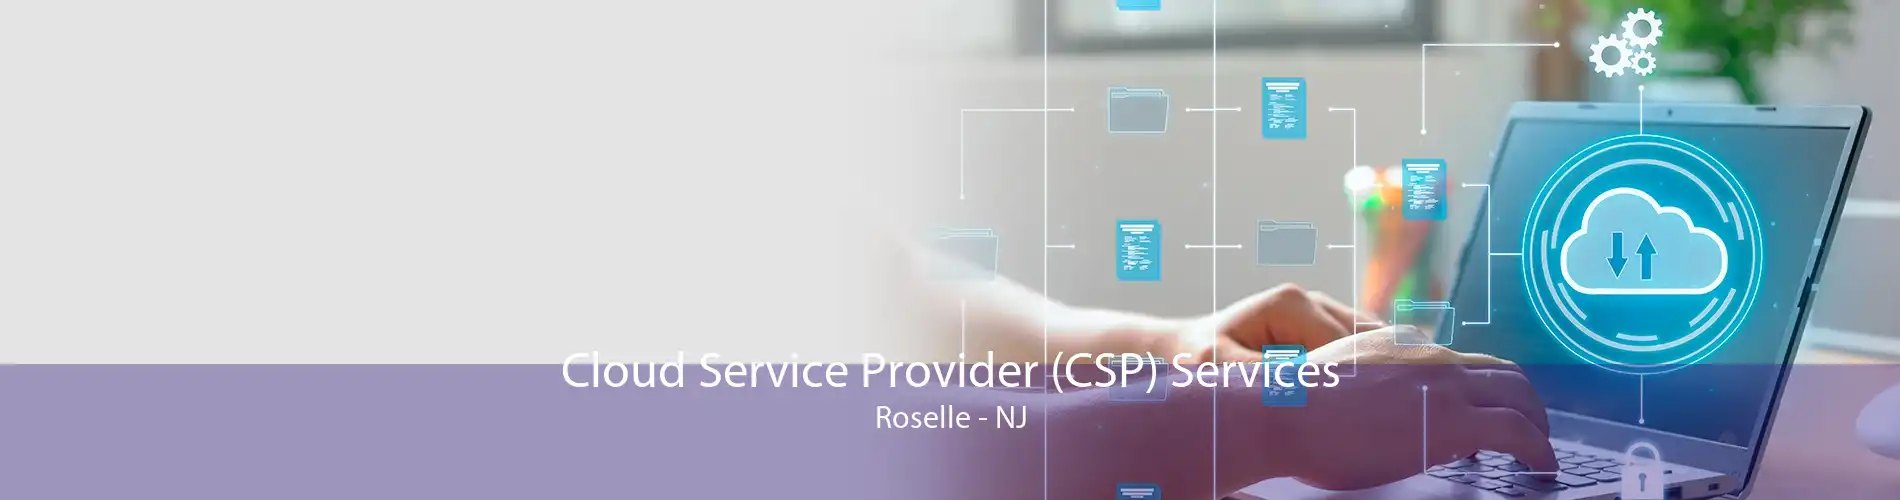 Cloud Service Provider (CSP) Services Roselle - NJ